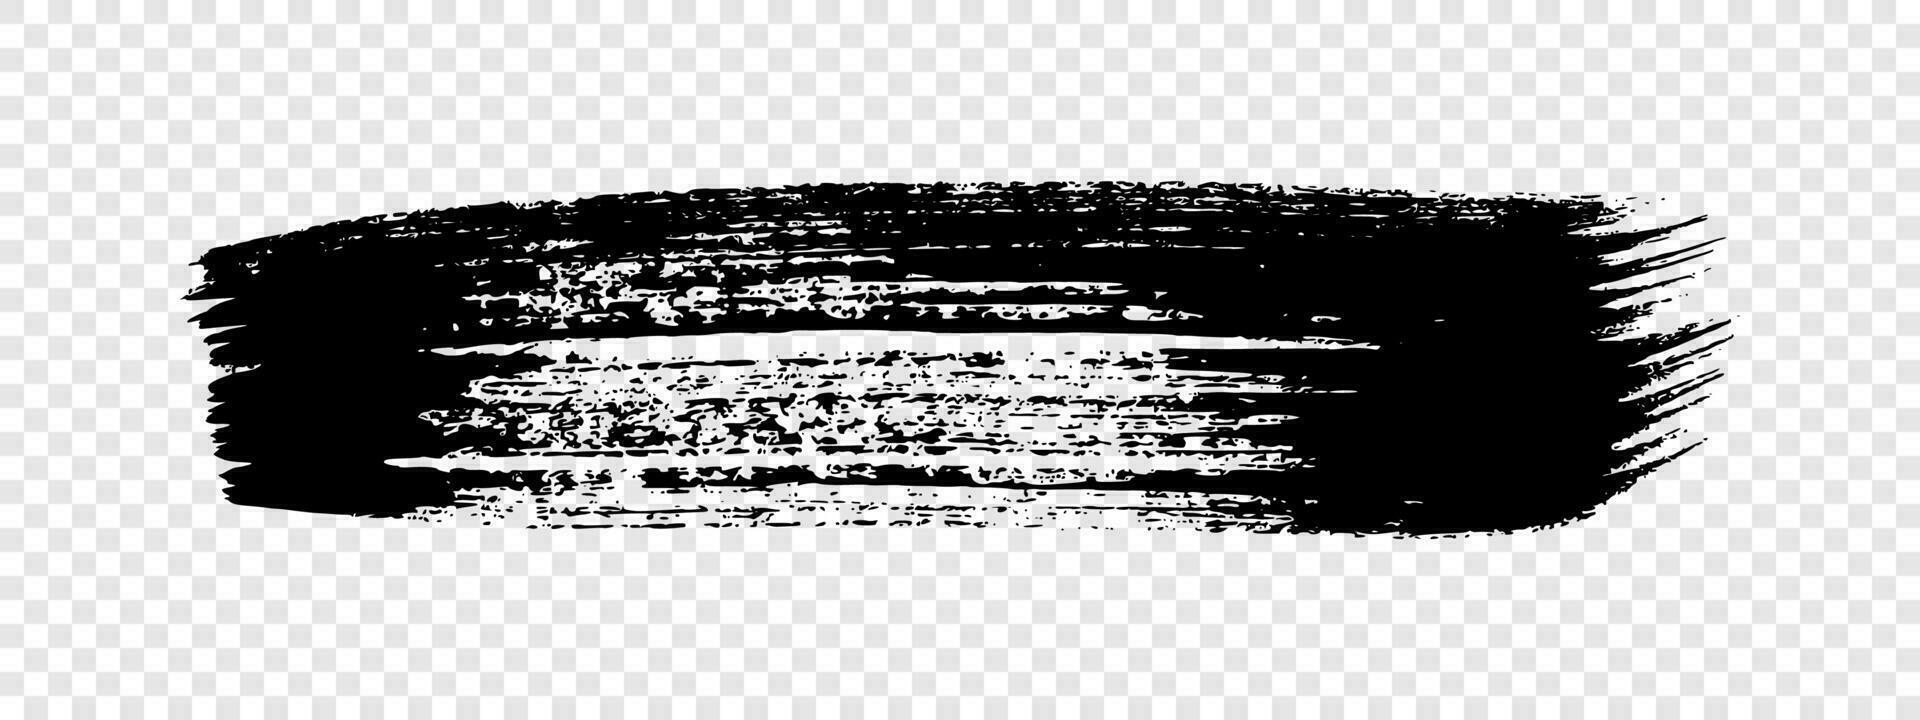 Black grunge brush stroke. Painted ink stripe. Ink spot isolated on background. Vector illustration